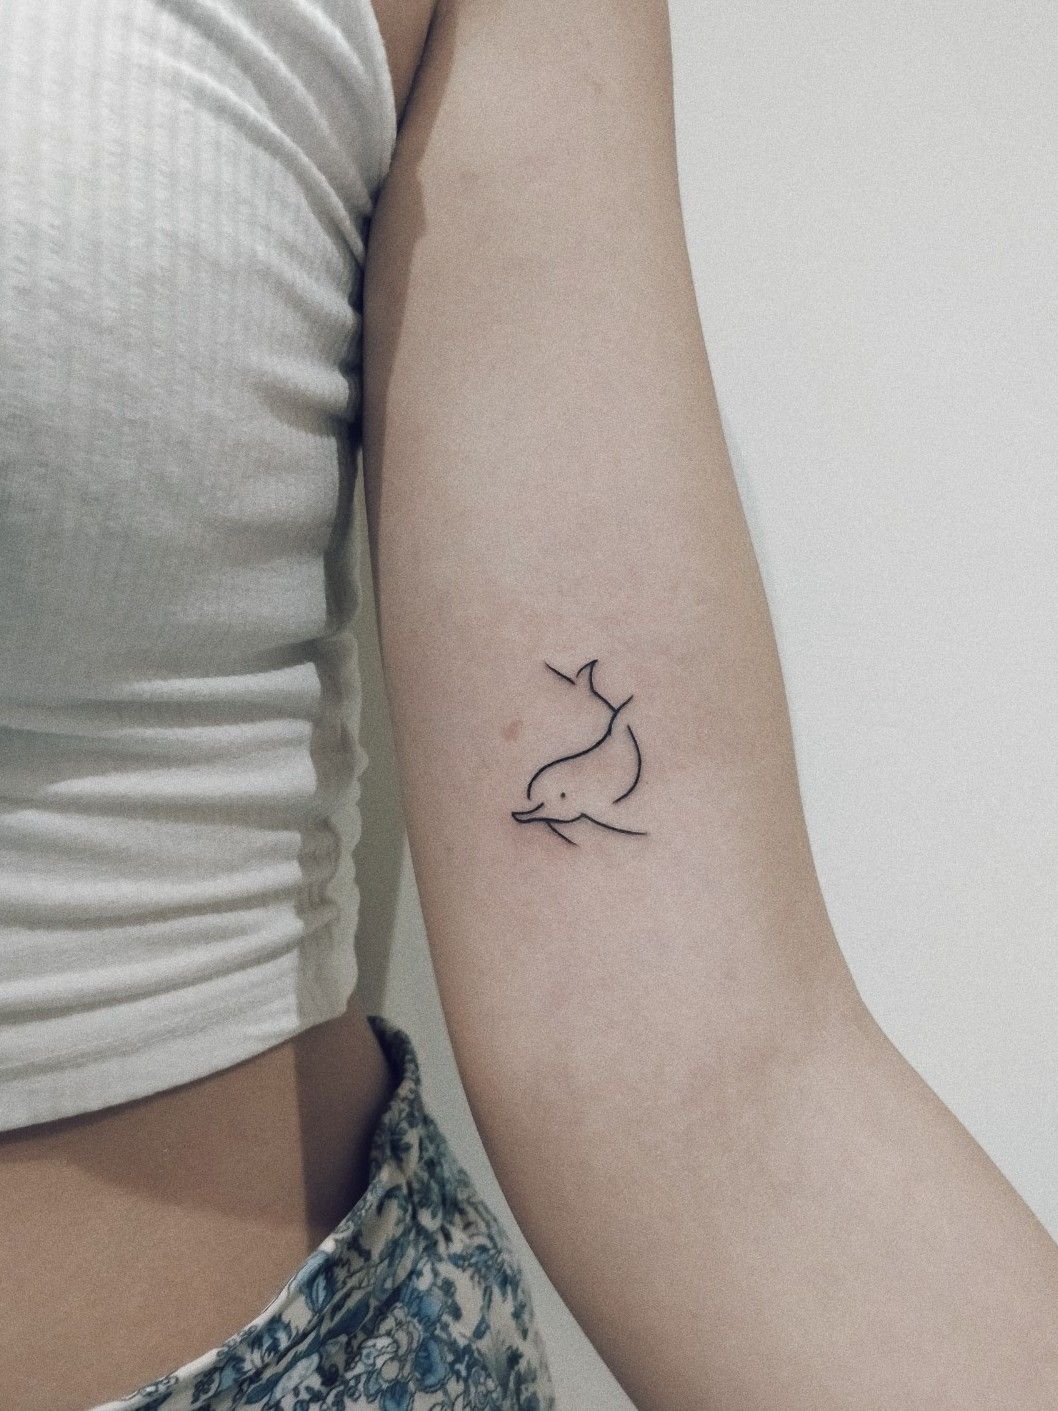 Small Dolphin Tattoos Design  Small Dolphin Tattoos  Small Tattoos   MomCanvas